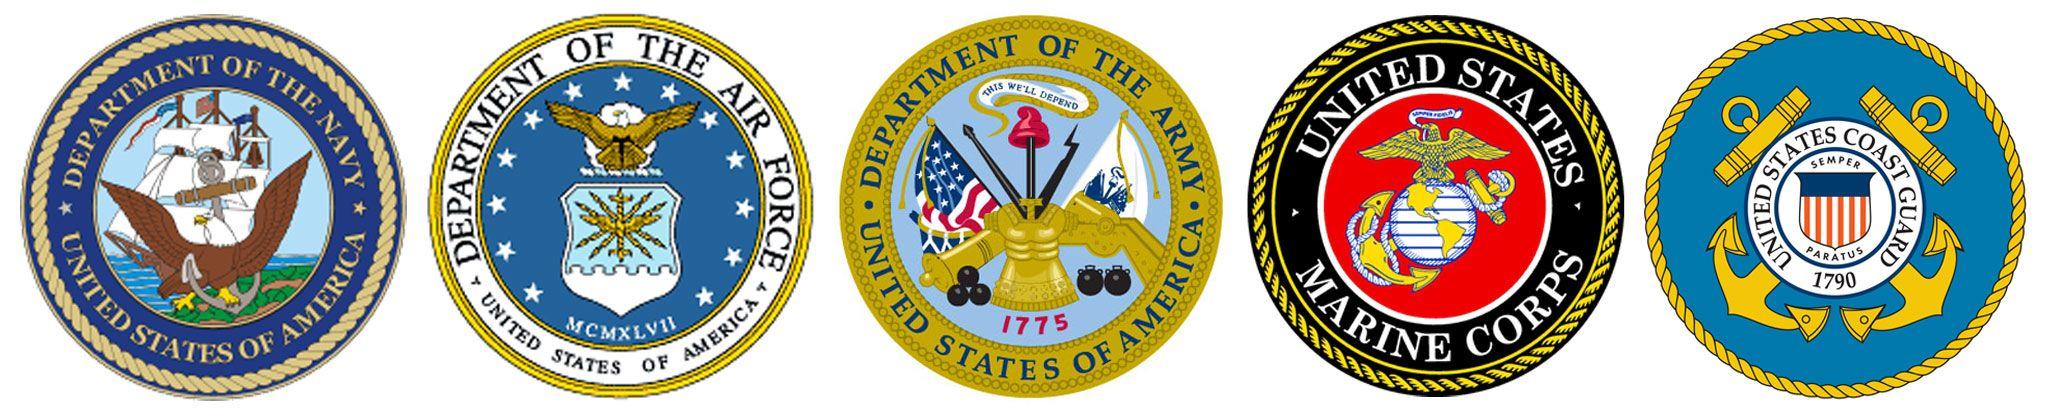 Us Military Logo - Free Military Logos Clipart, Download Free Clip Art, Free Clip Art